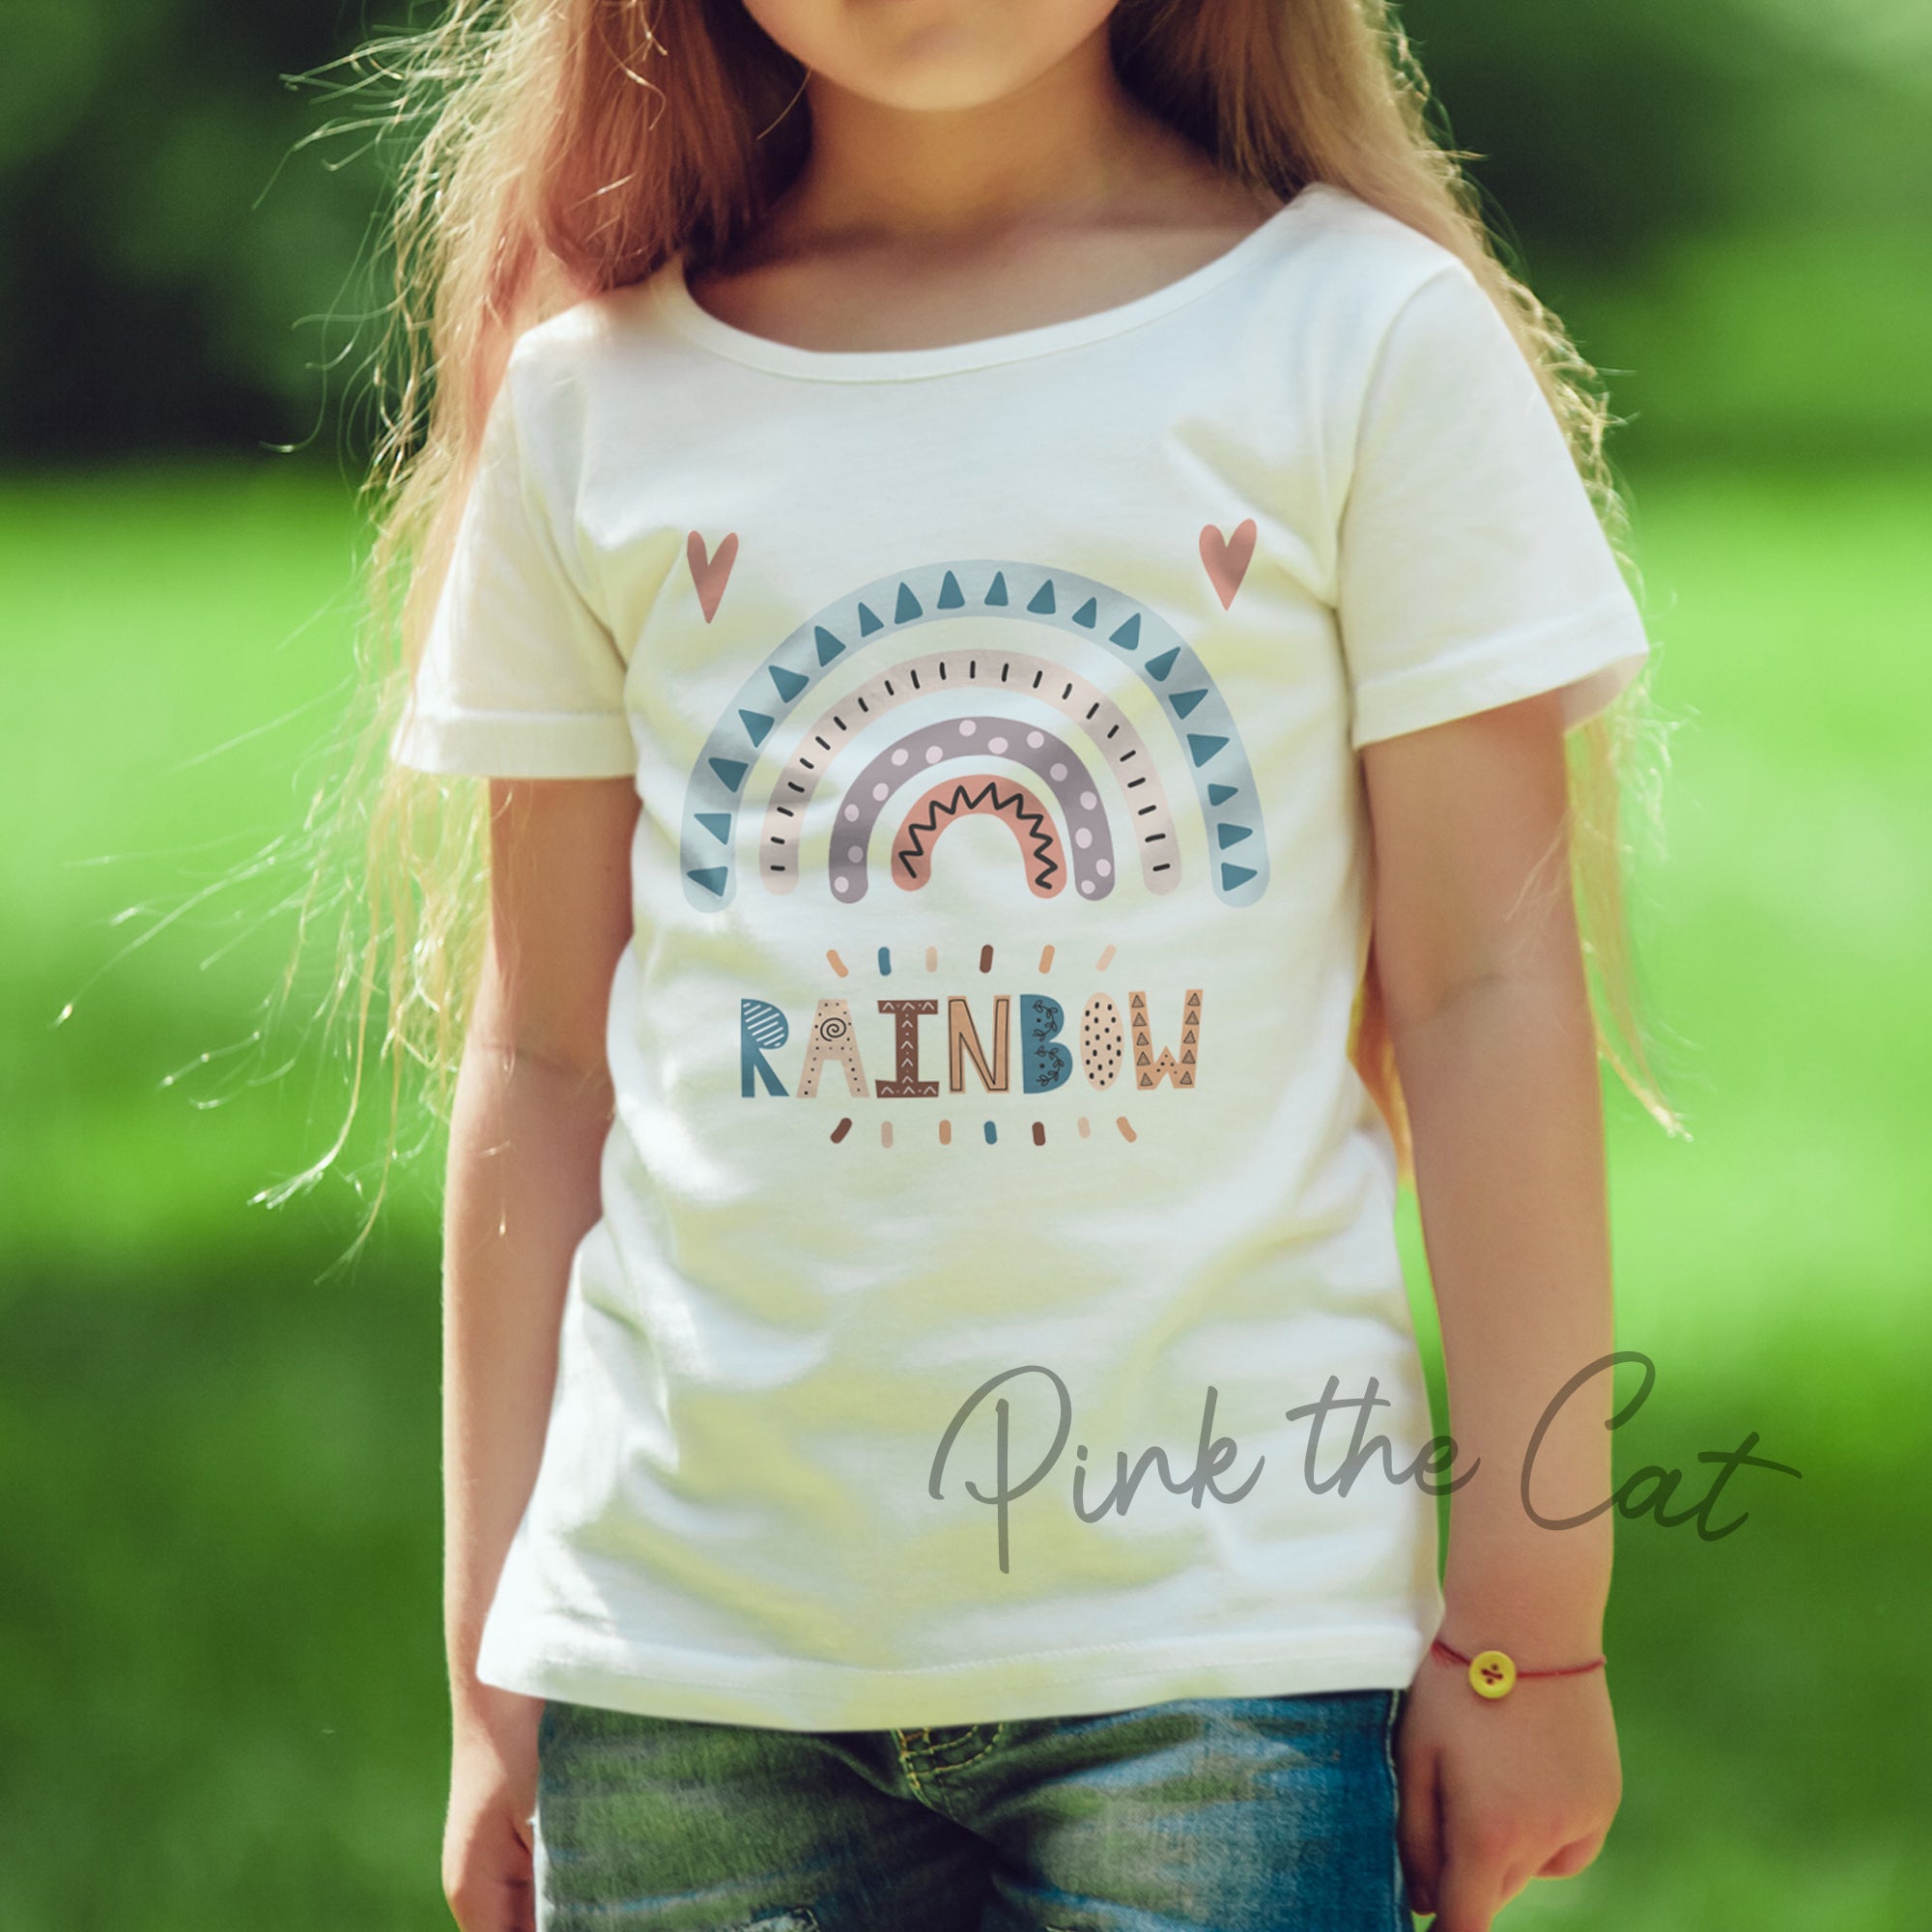 Tribal boho rainbow for kids toodler girl pastel t-shirt – Pink the Cat